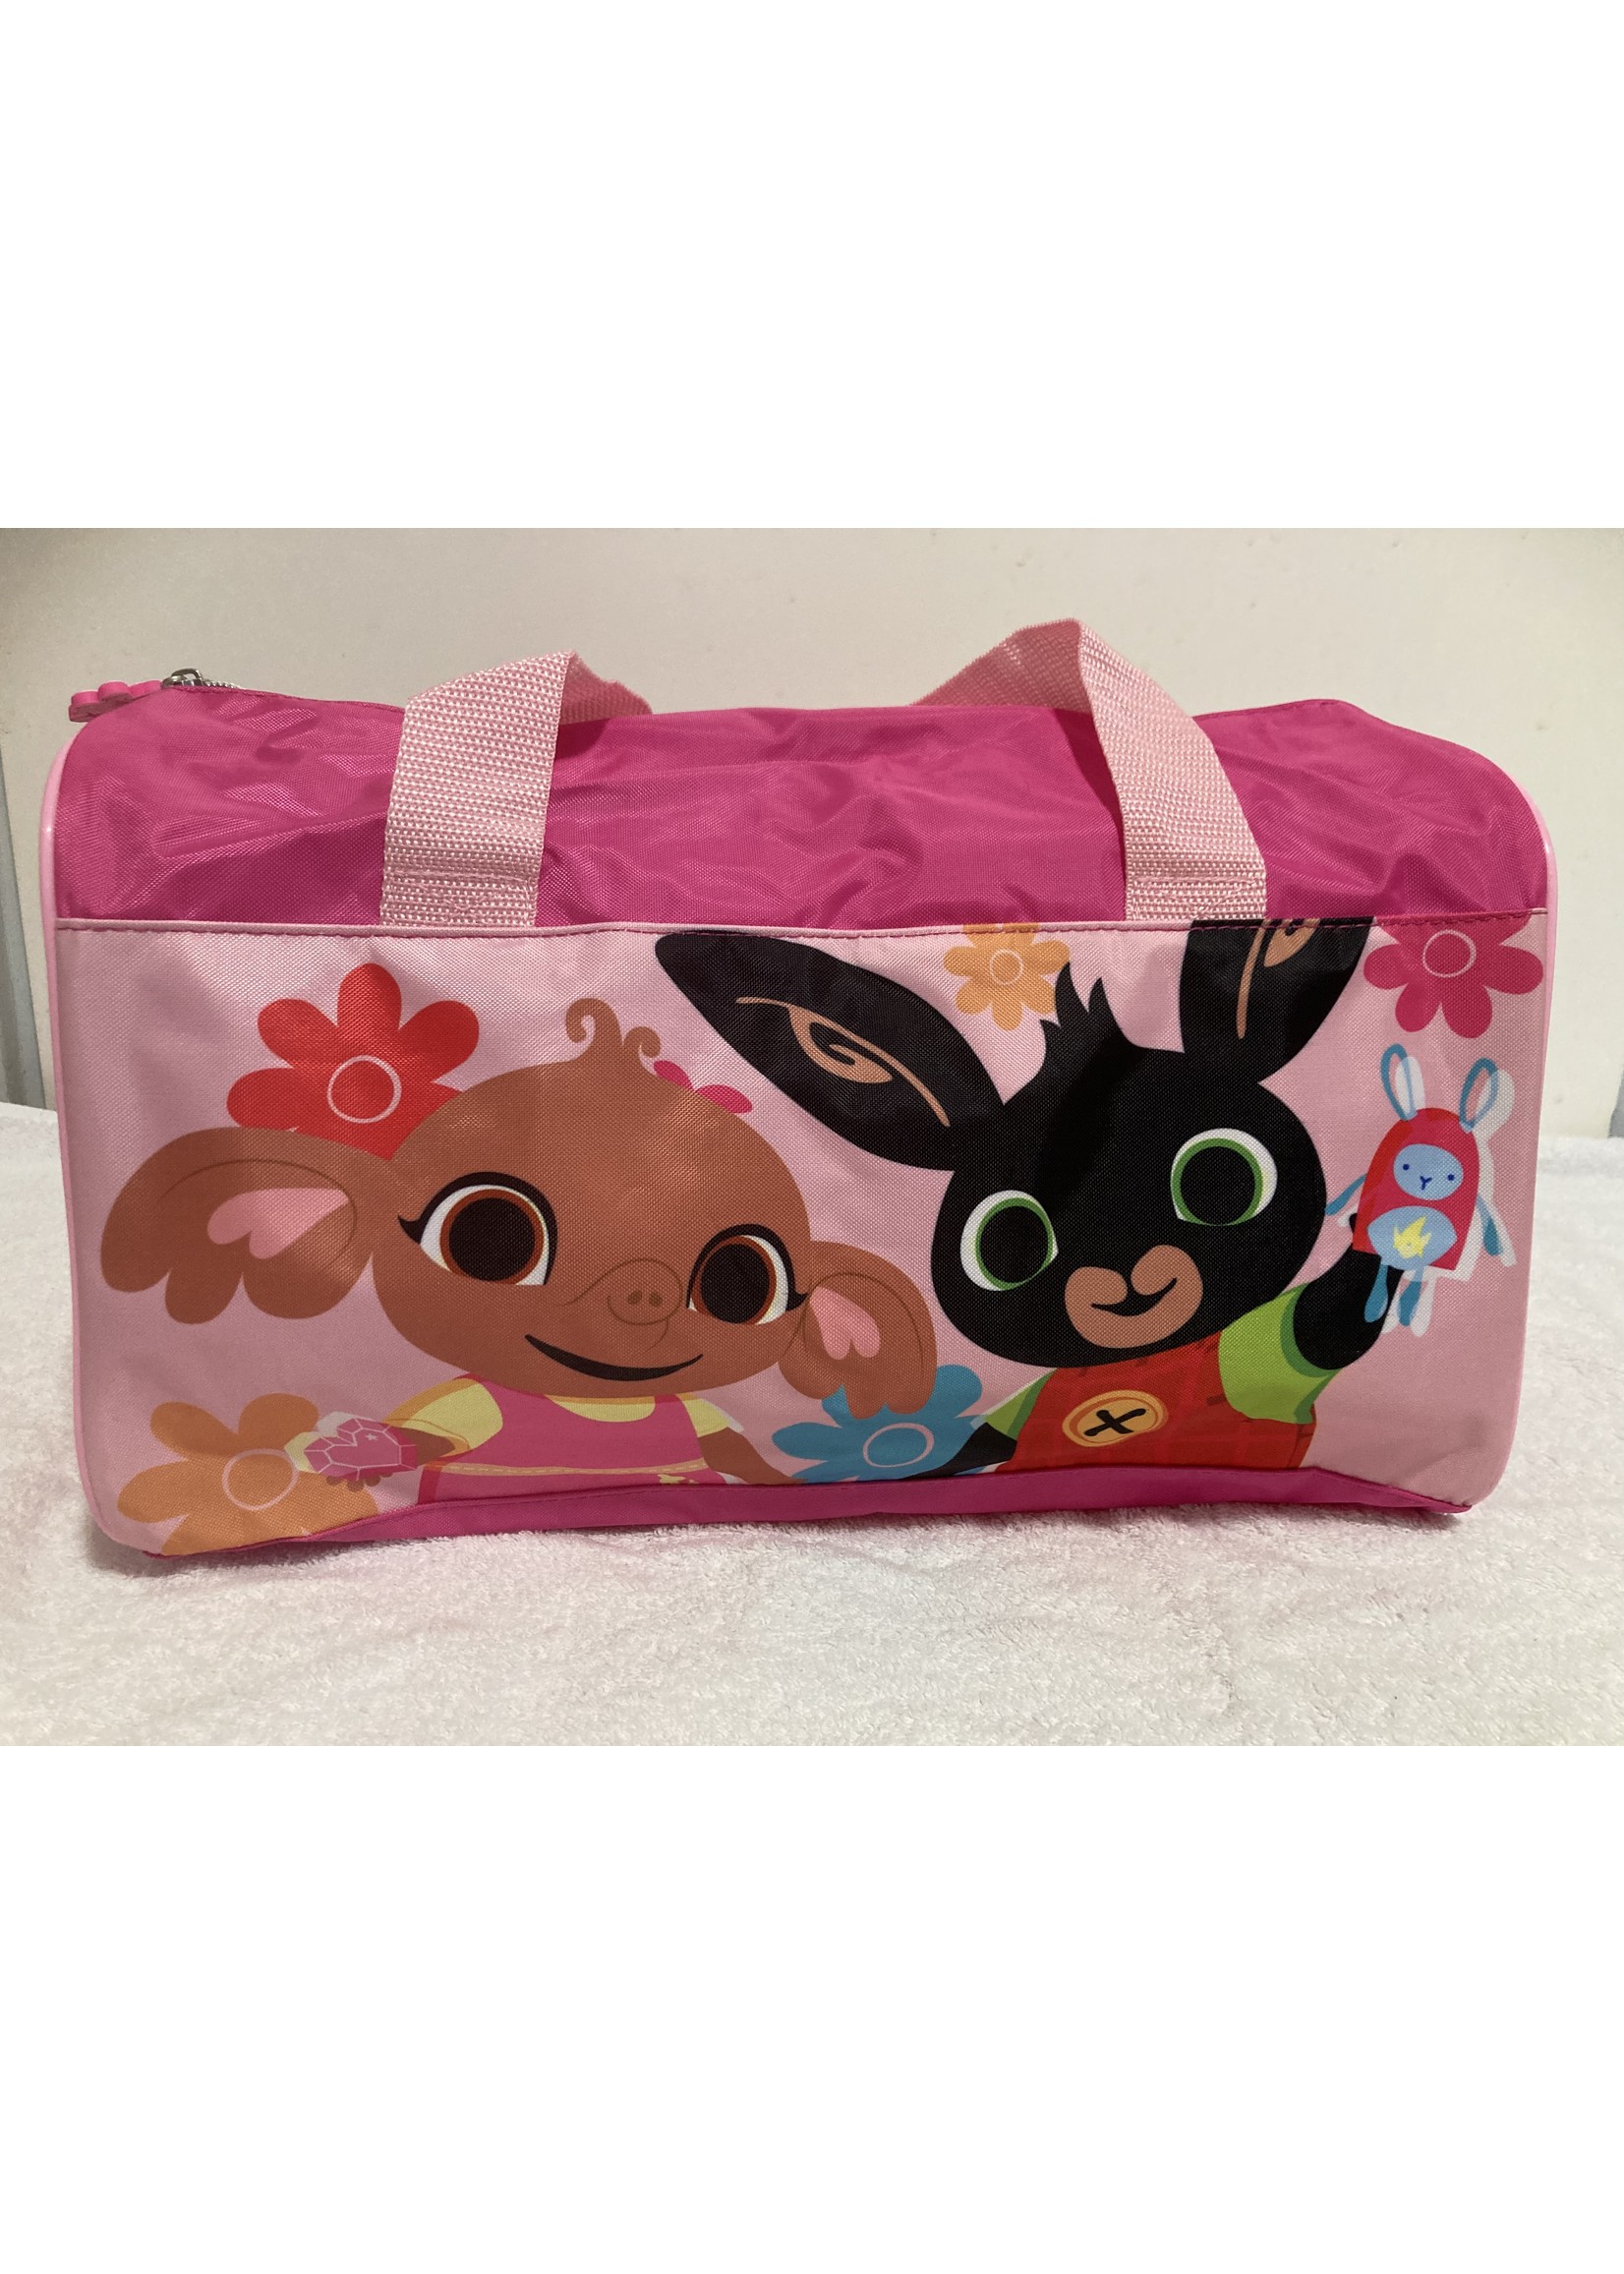 Bing Bunny Bing sports bag from BING pink